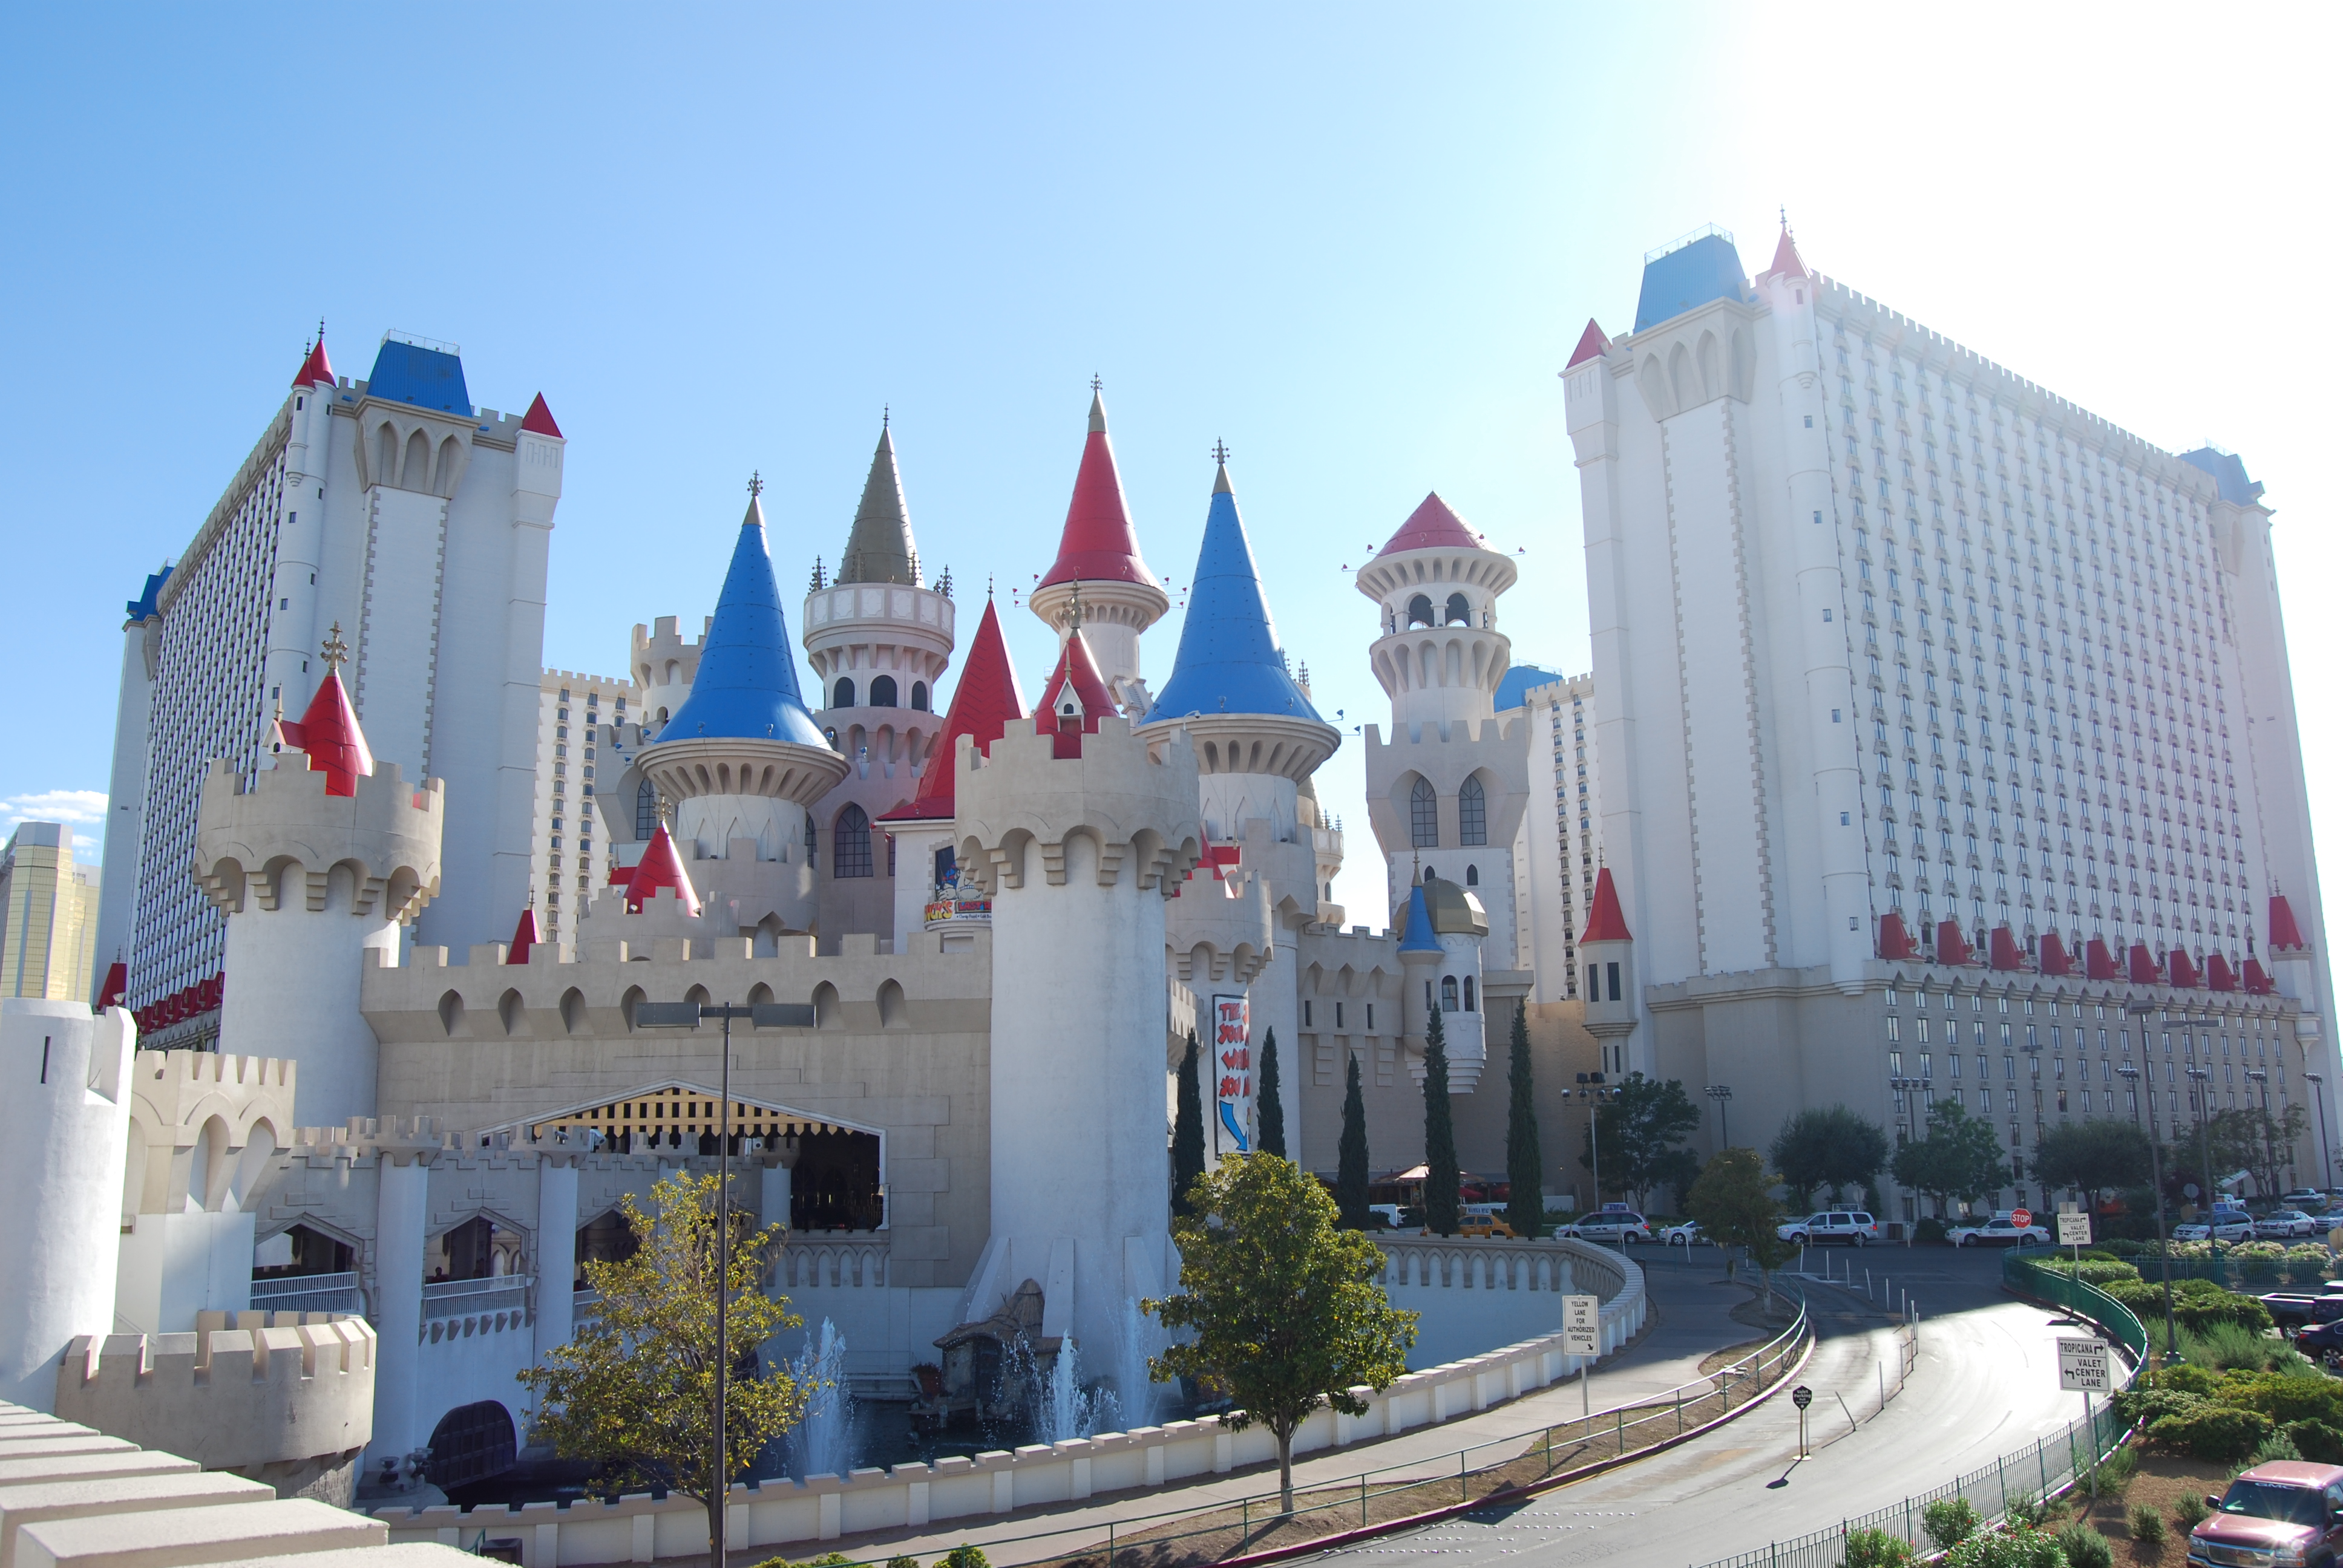 Tournament of Kings  Excalibur Hotel & Casino